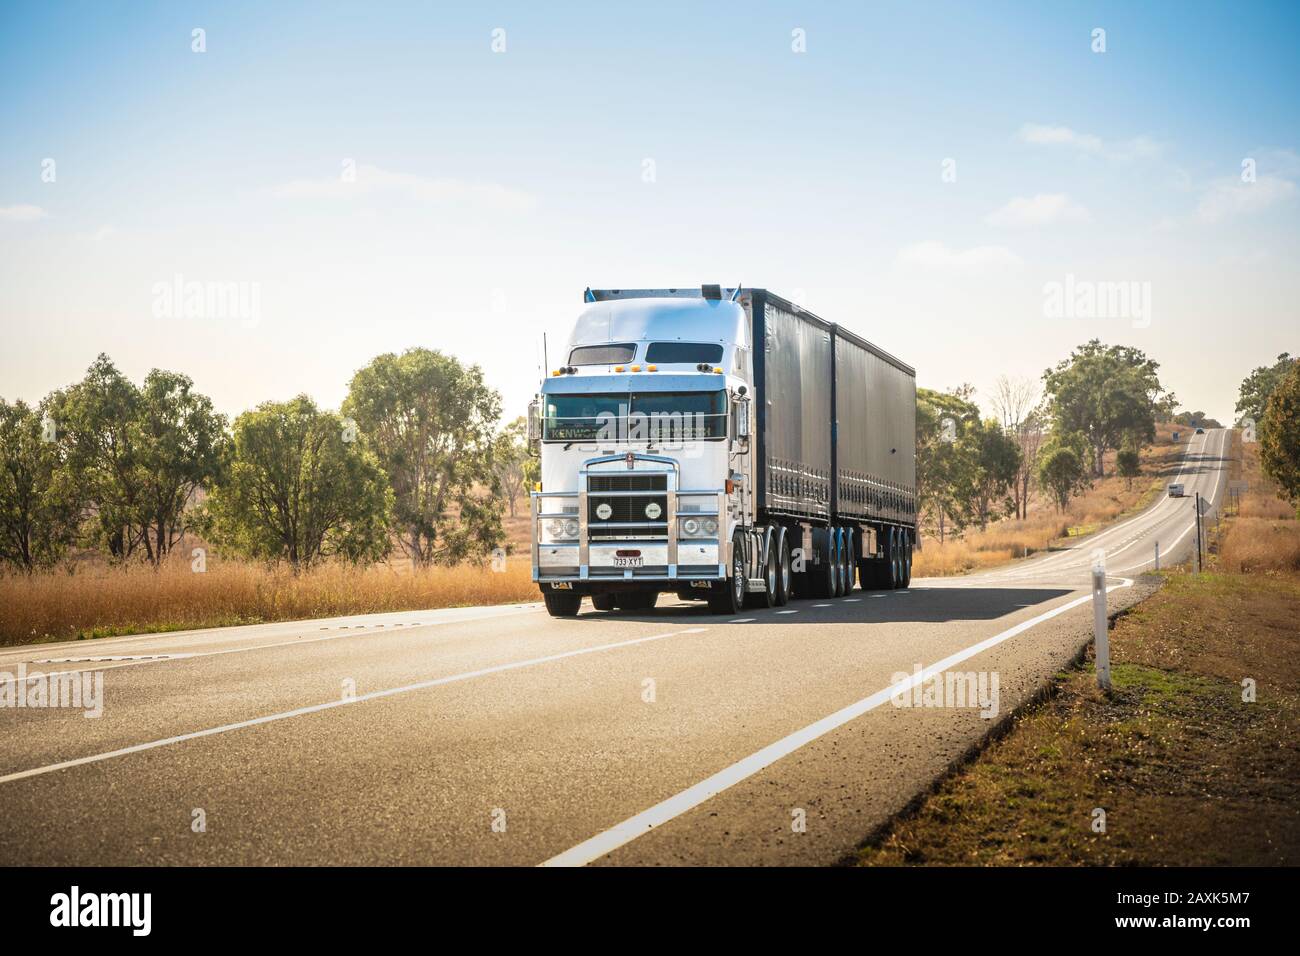 Australia, Northern Territory, Road, Truck, Road Train Stock Photo